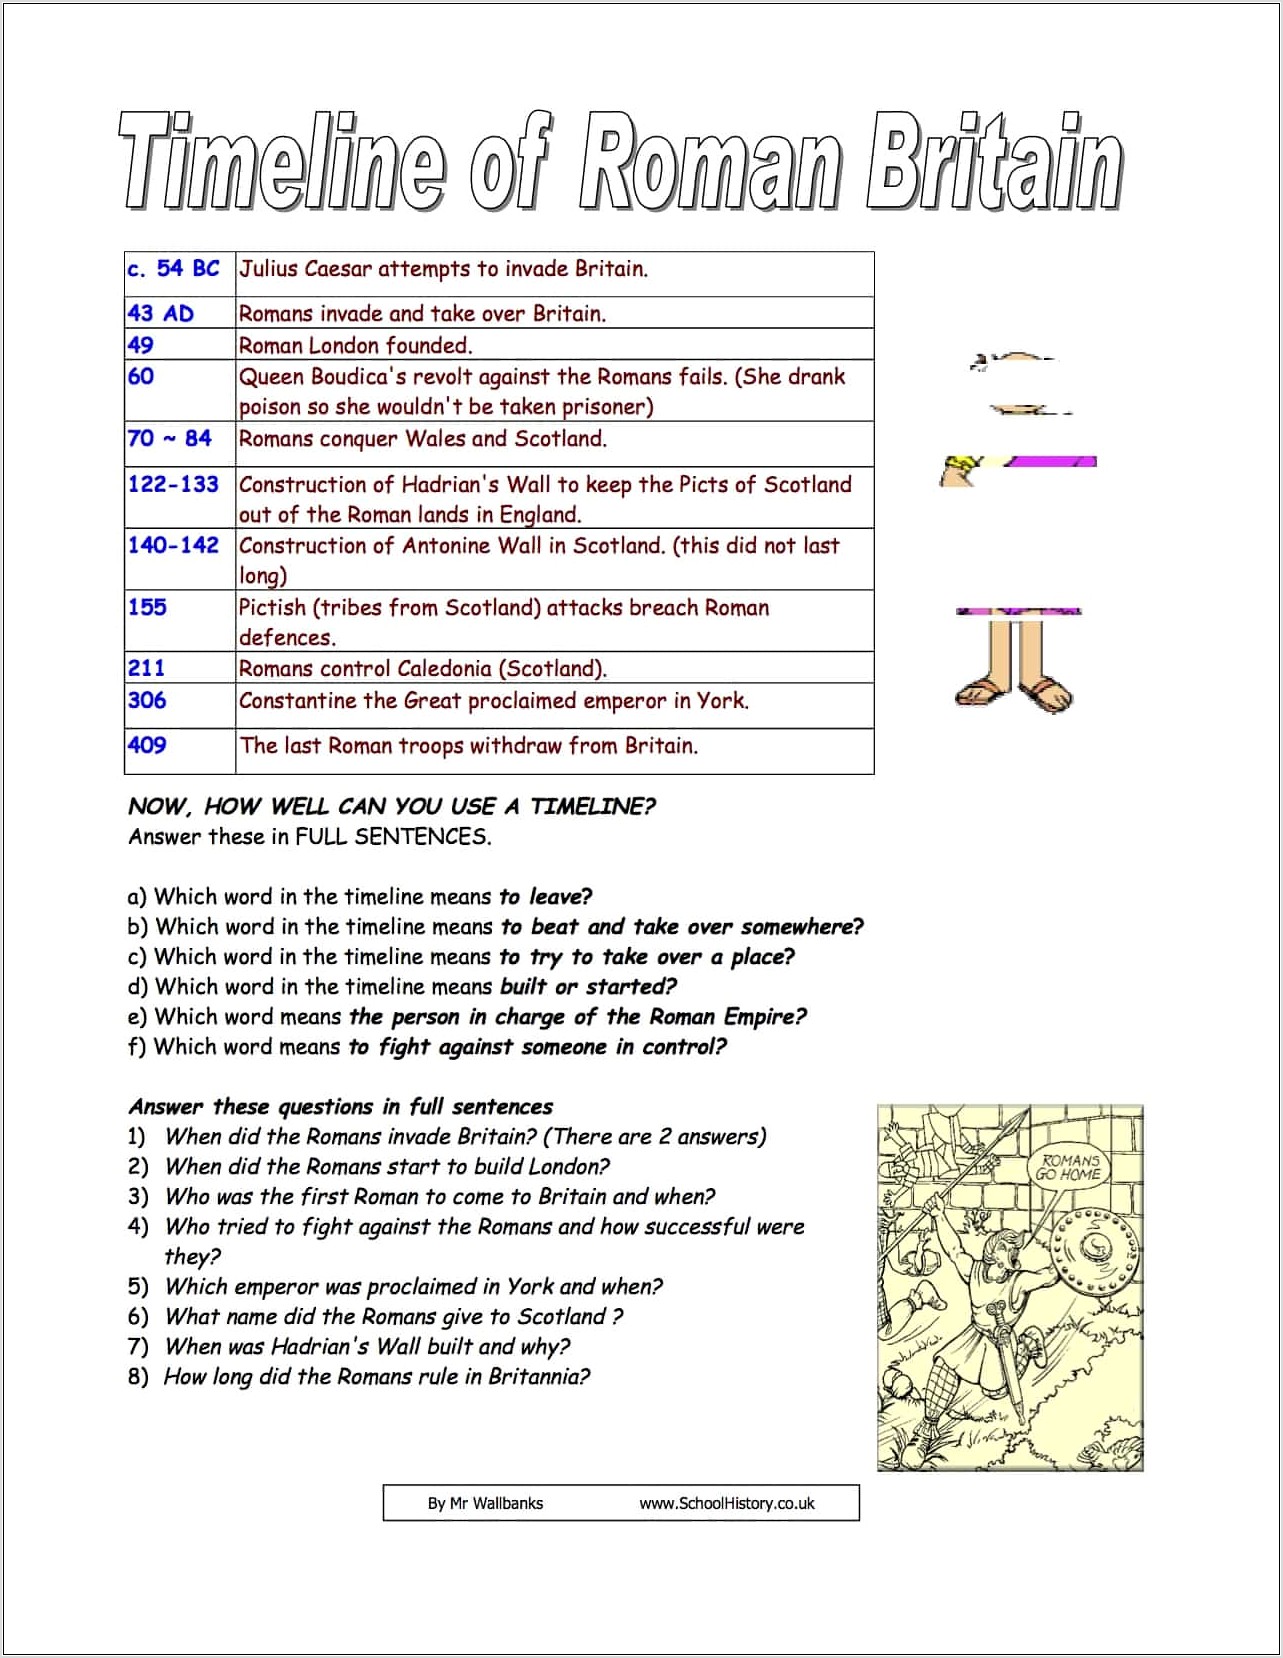 Roman Britain Timeline Worksheet